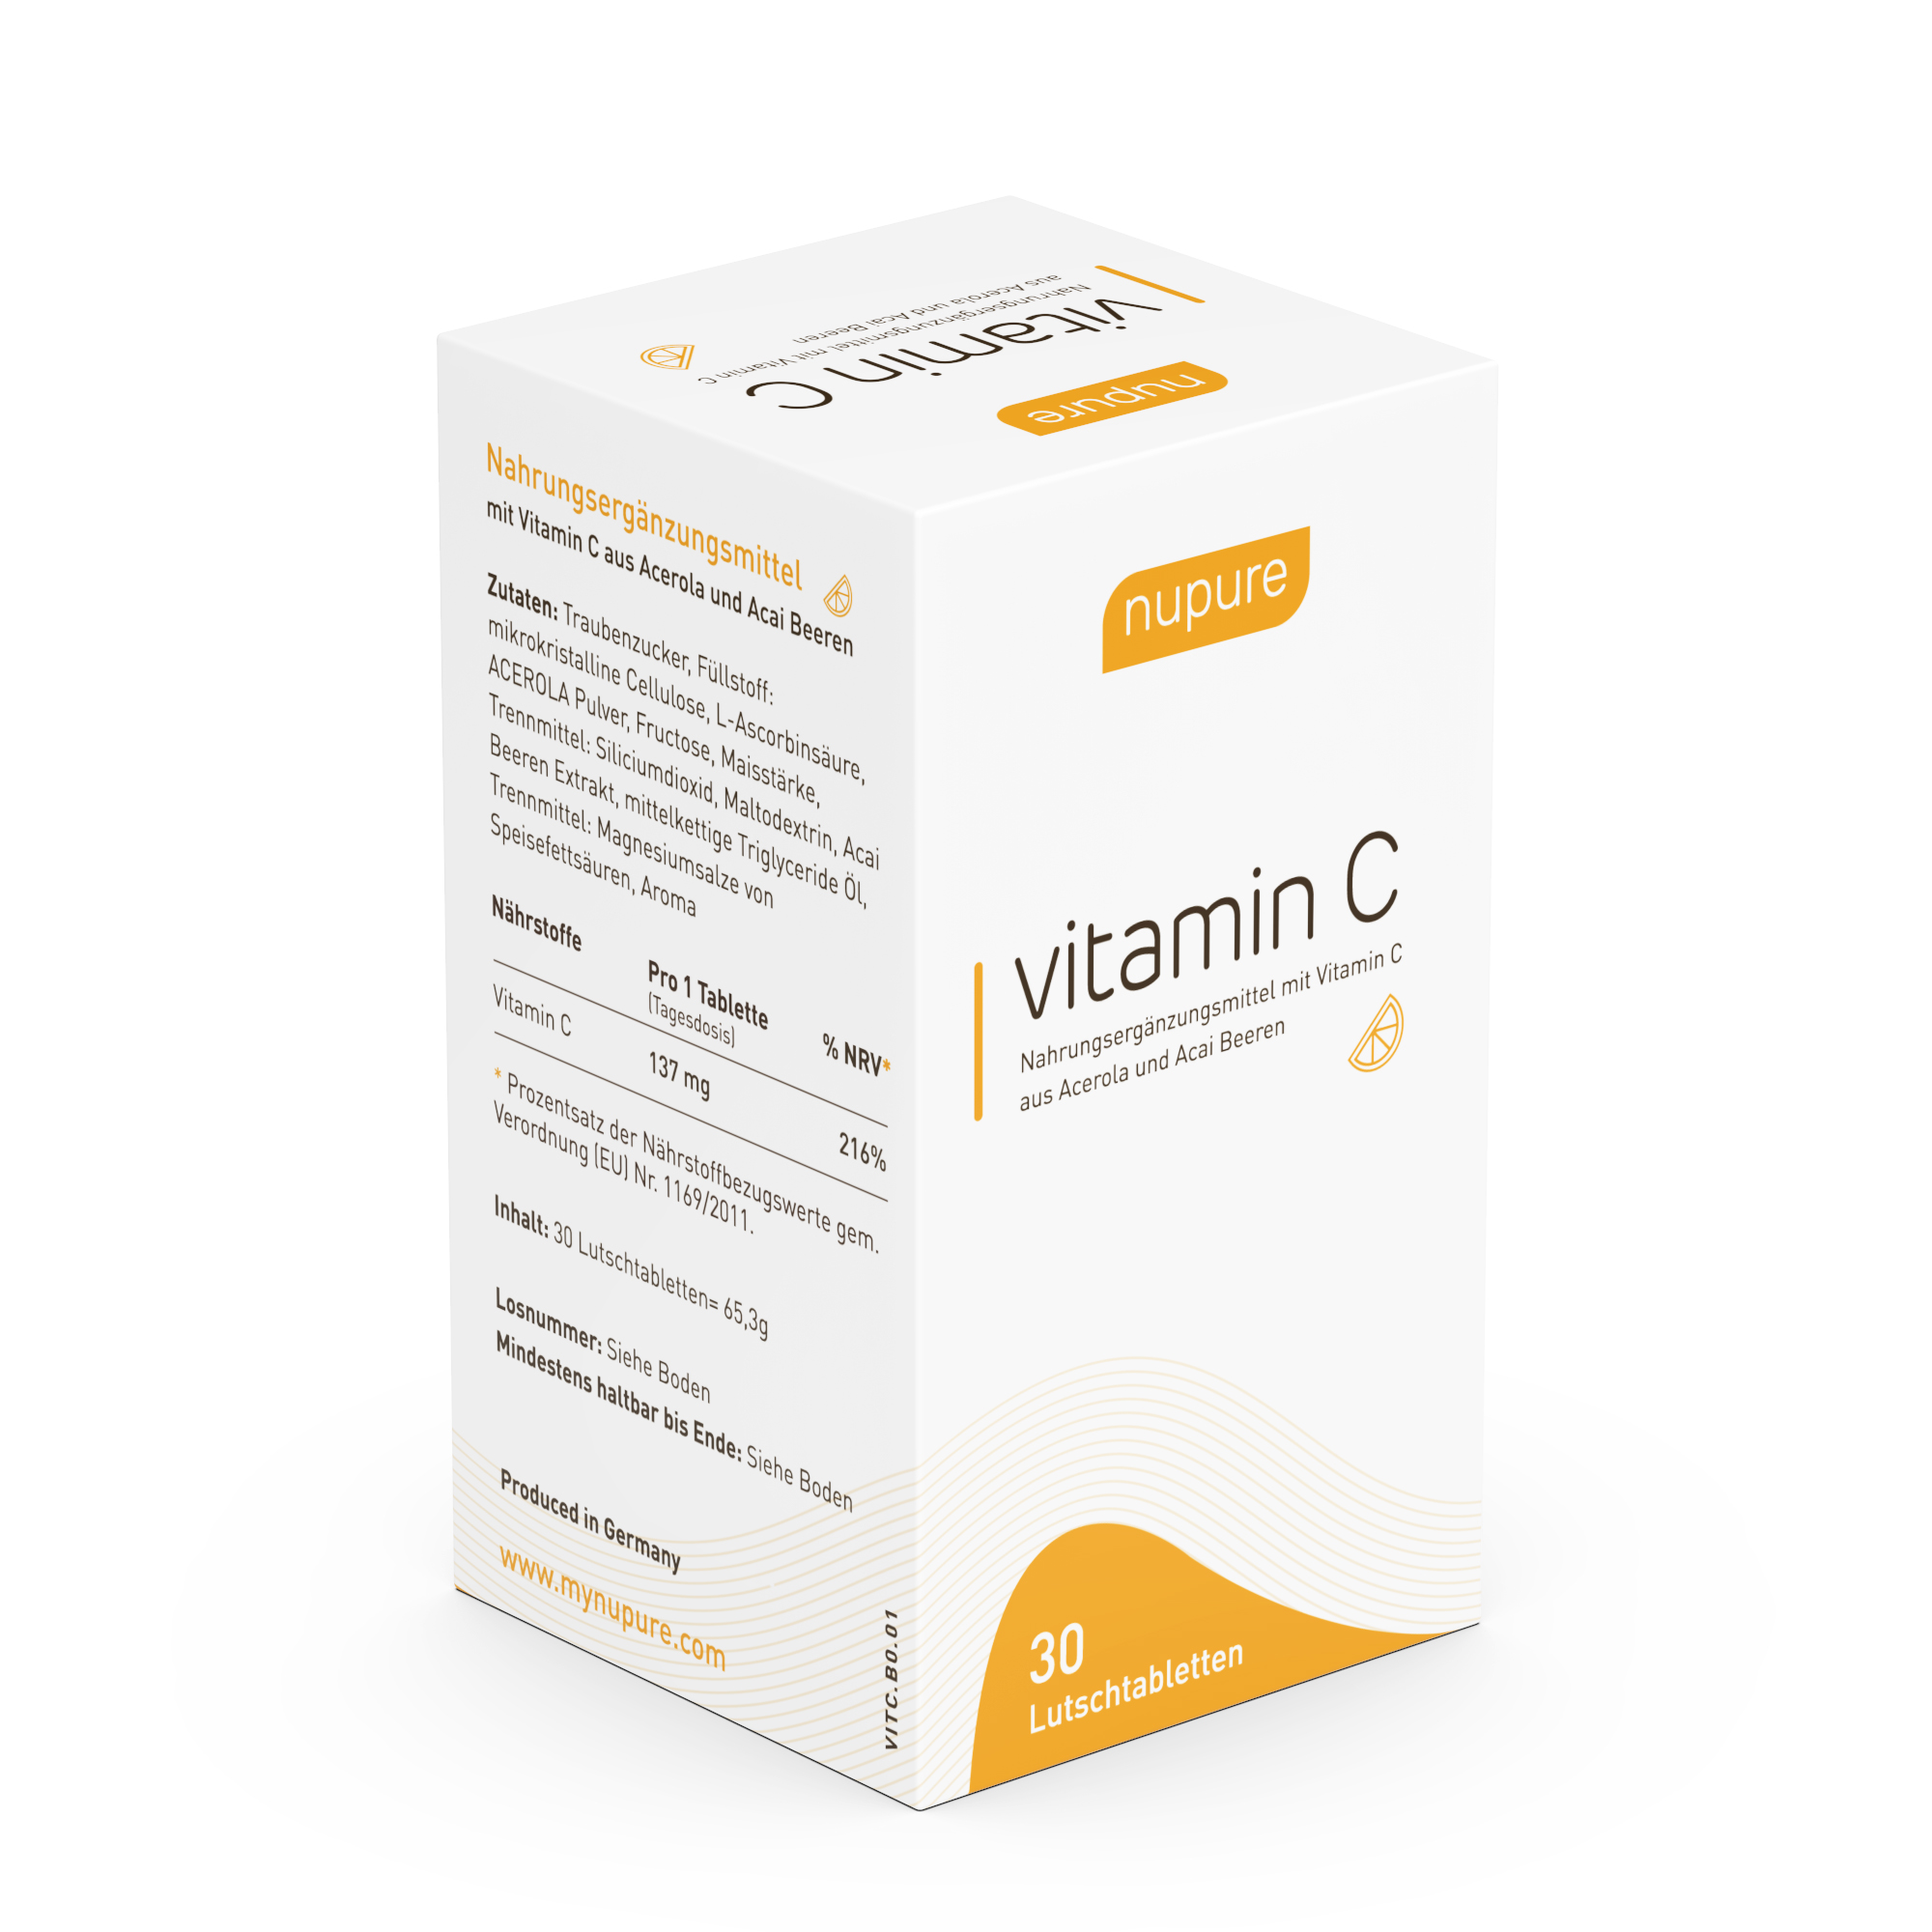 Nupure vitamin C Lutschtabletten Acerola & Acai